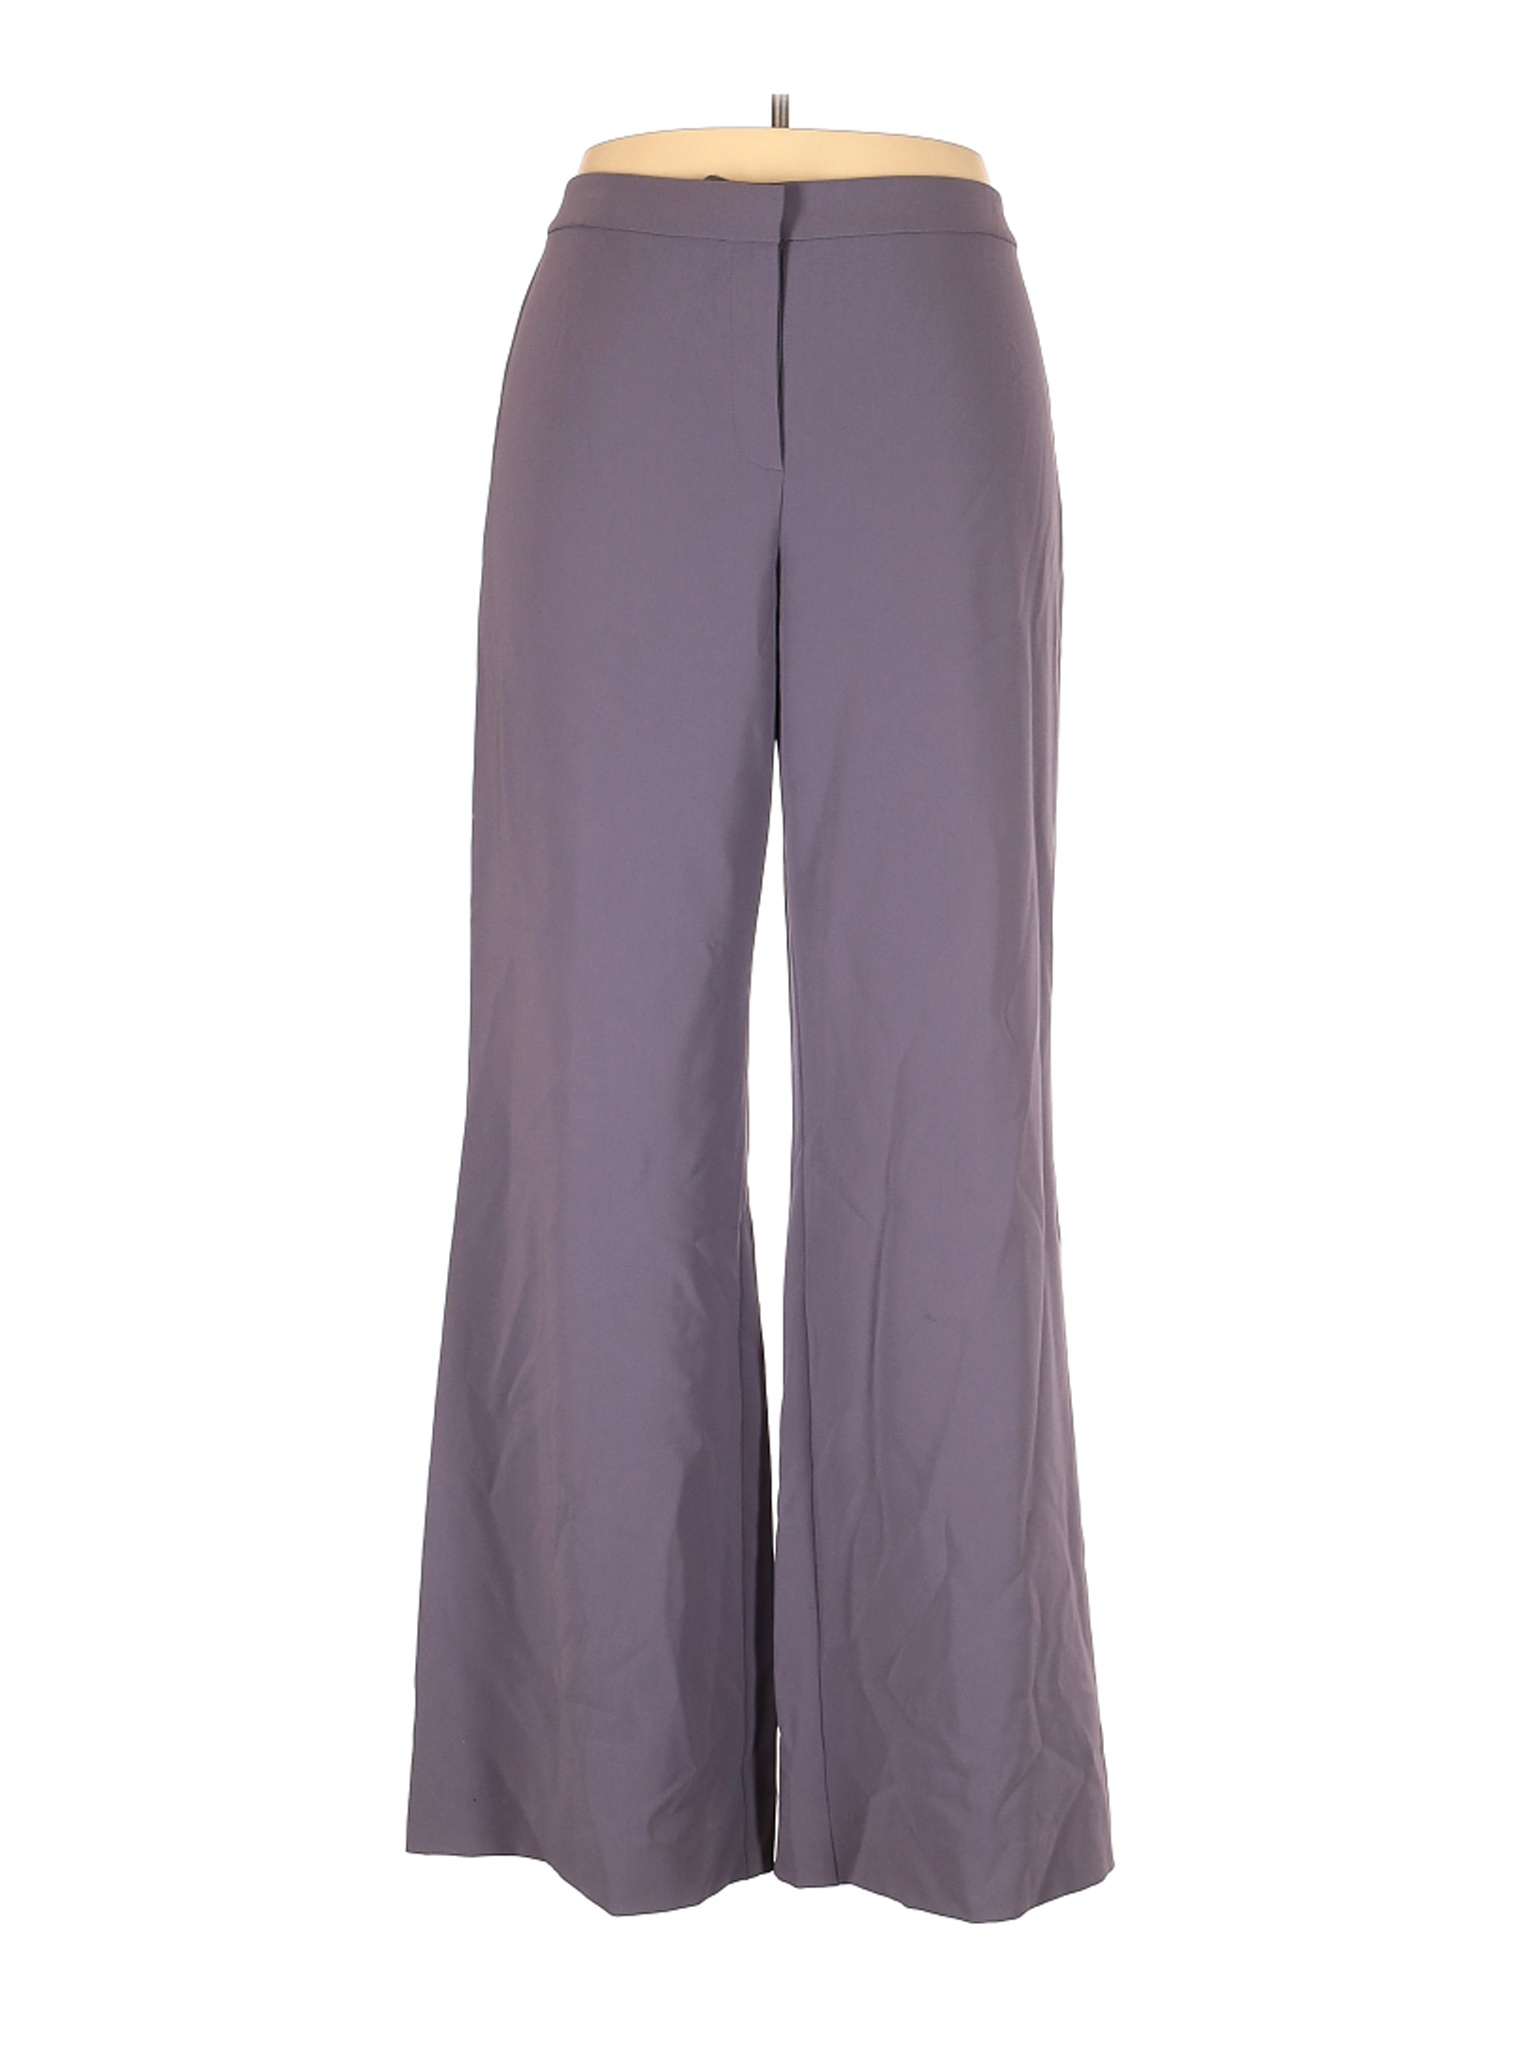 NWT H&M Women Purple Dress Pants 14 | eBay